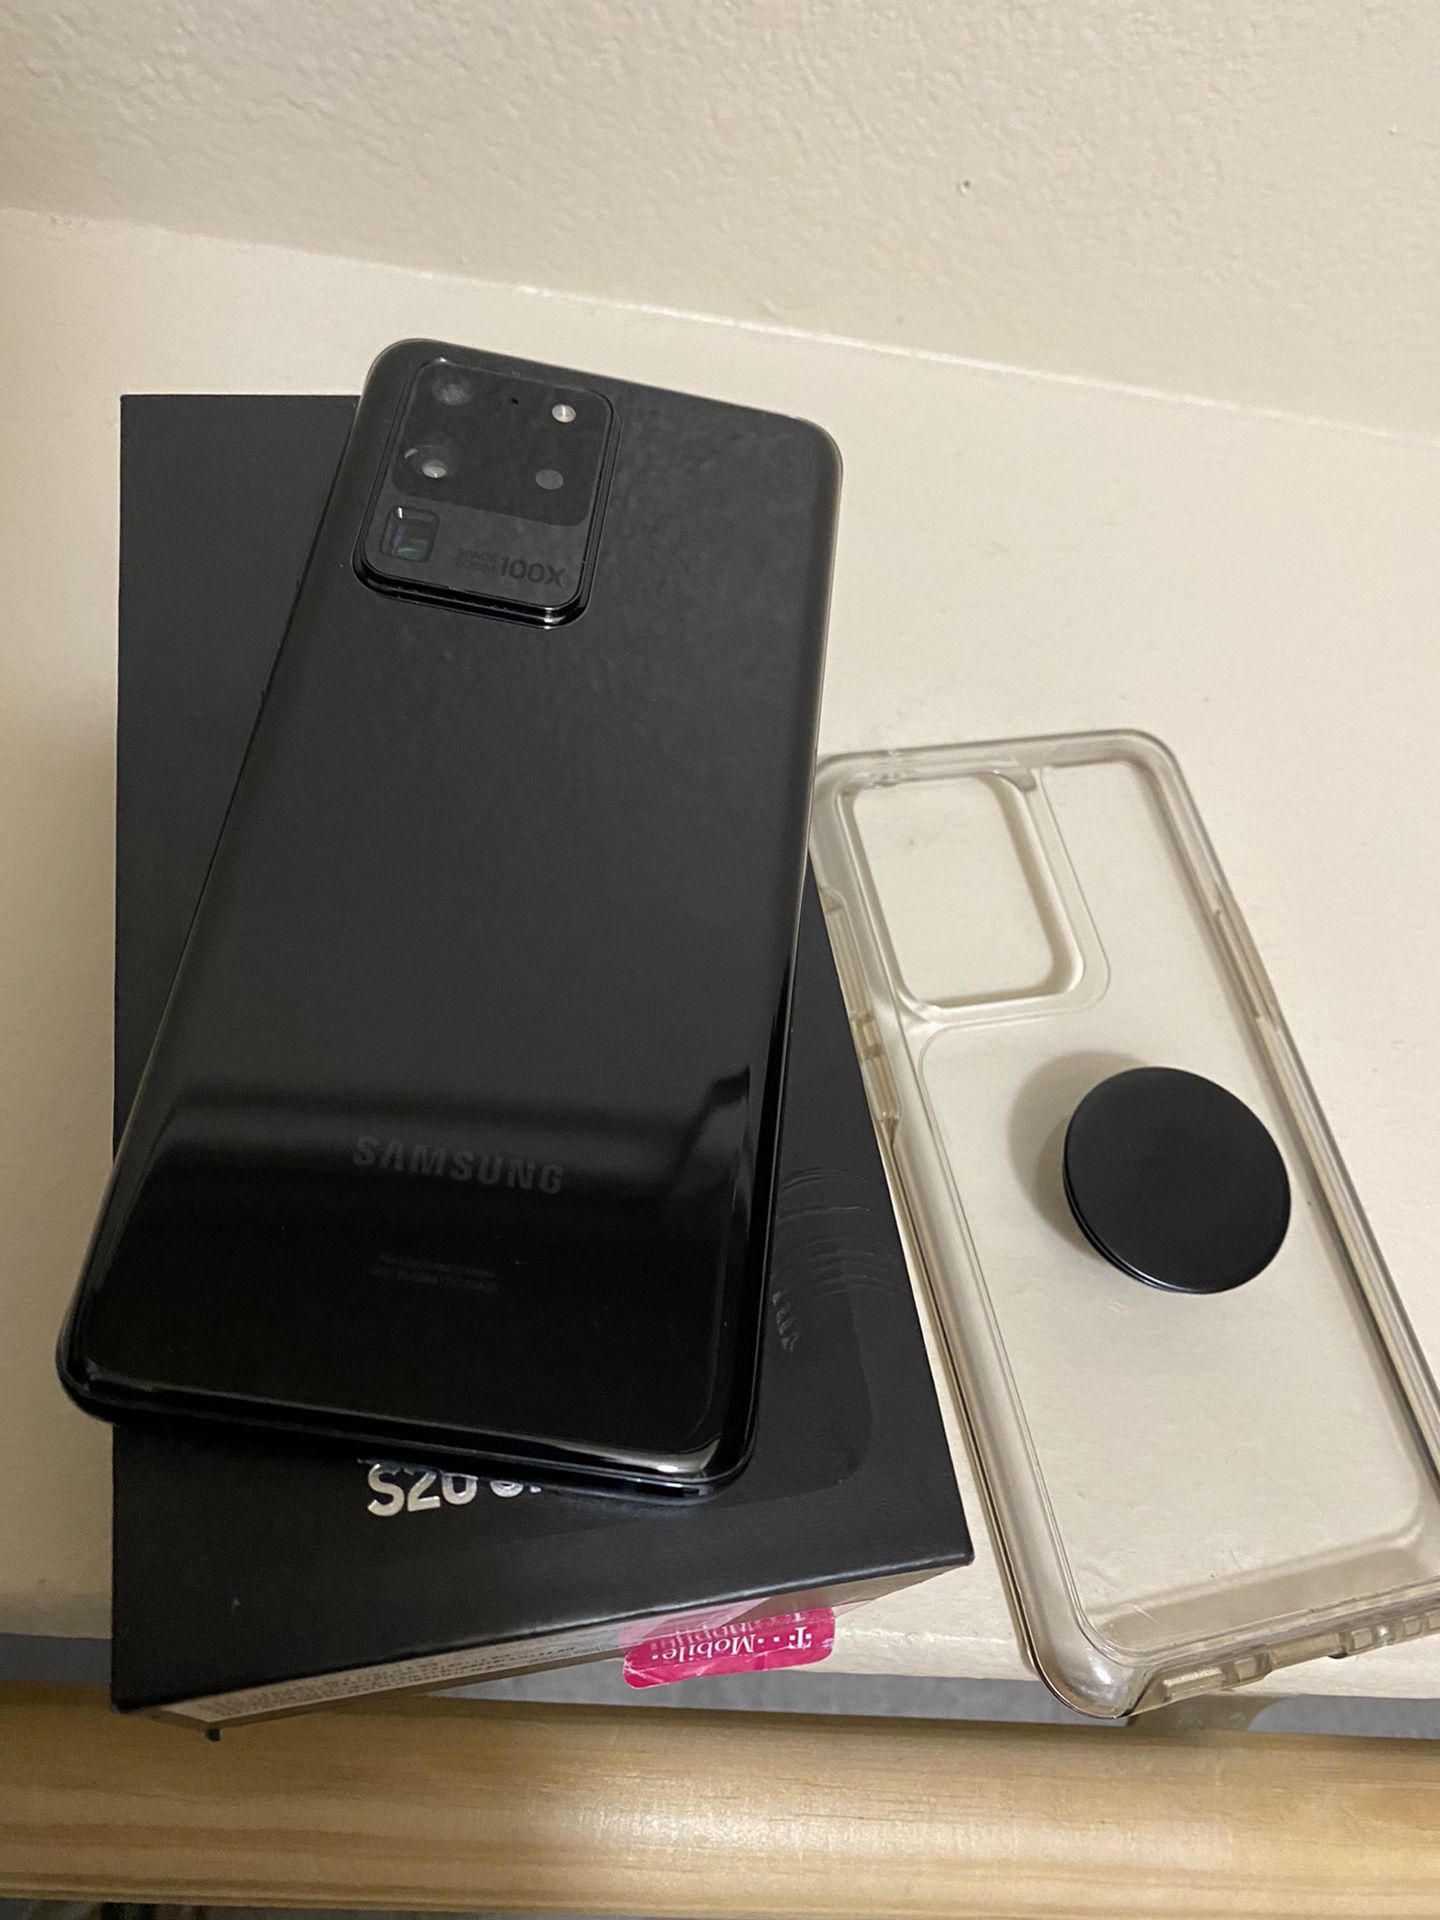 Samsung Galaxy S20 Ultra 128 GB - Black (T-Mobile)